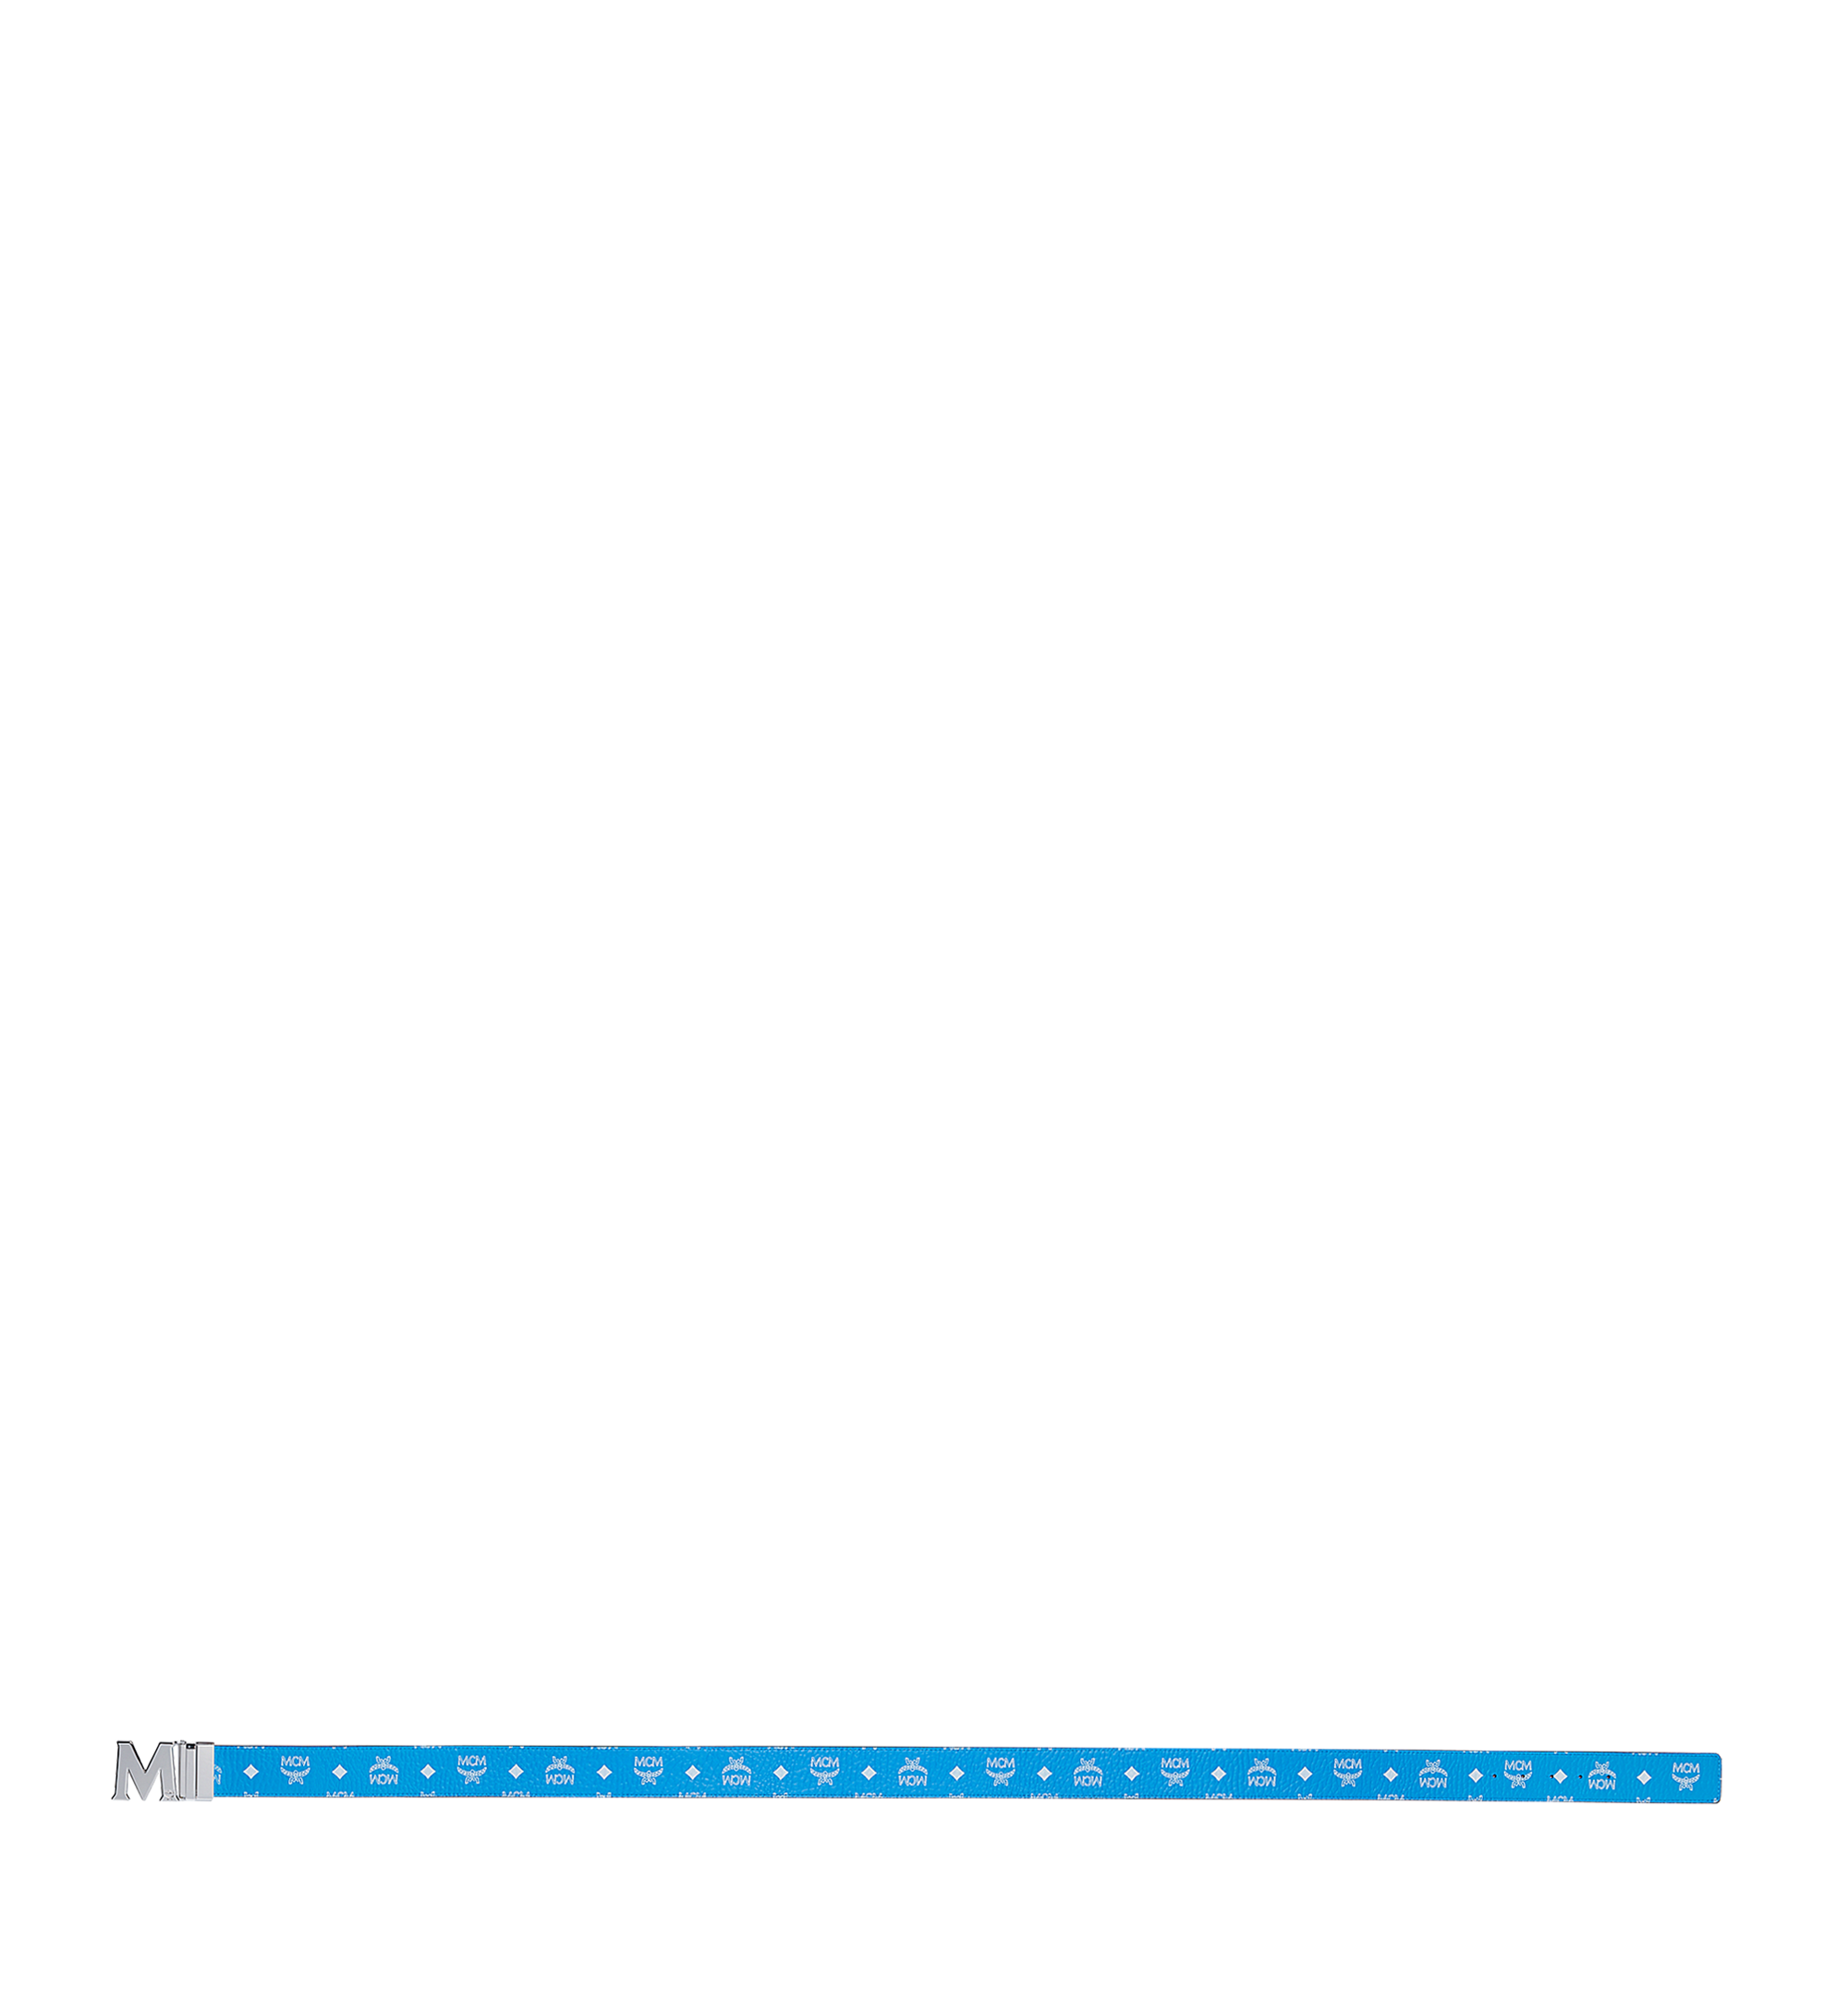 One Size M Reversible Belt 1.75 in White Logo Visetos Blue